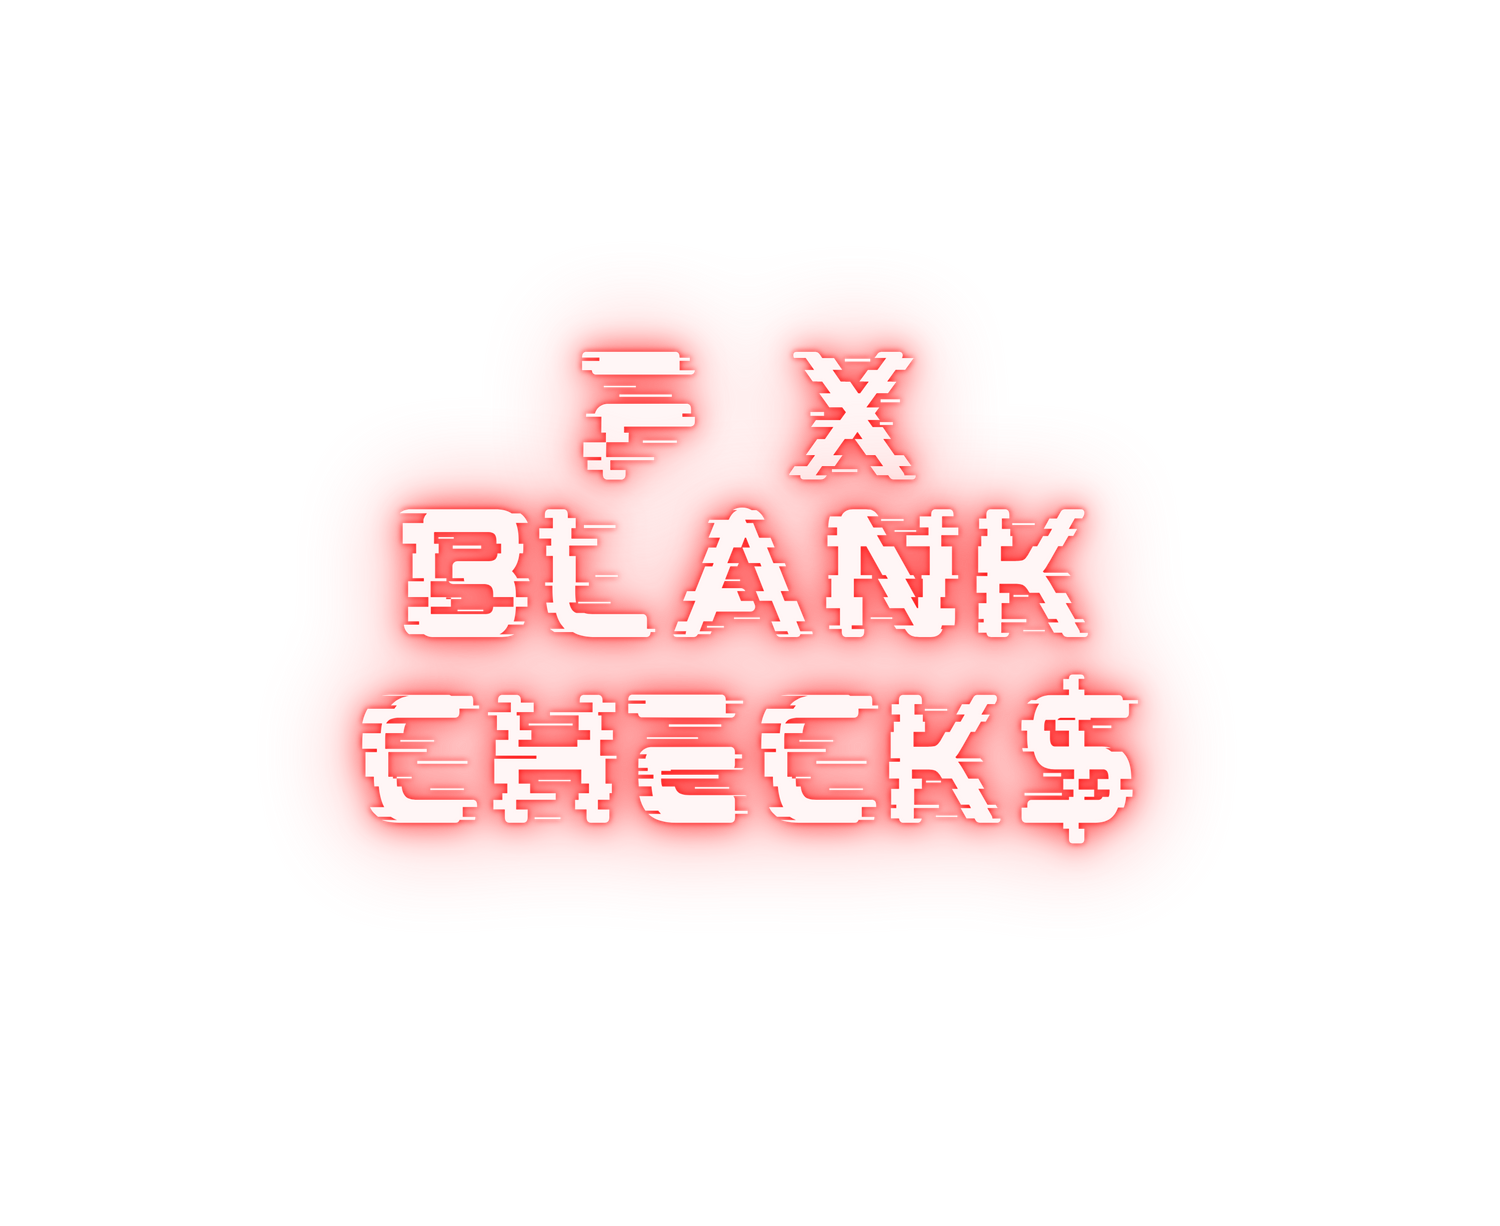 FX Blank Check$